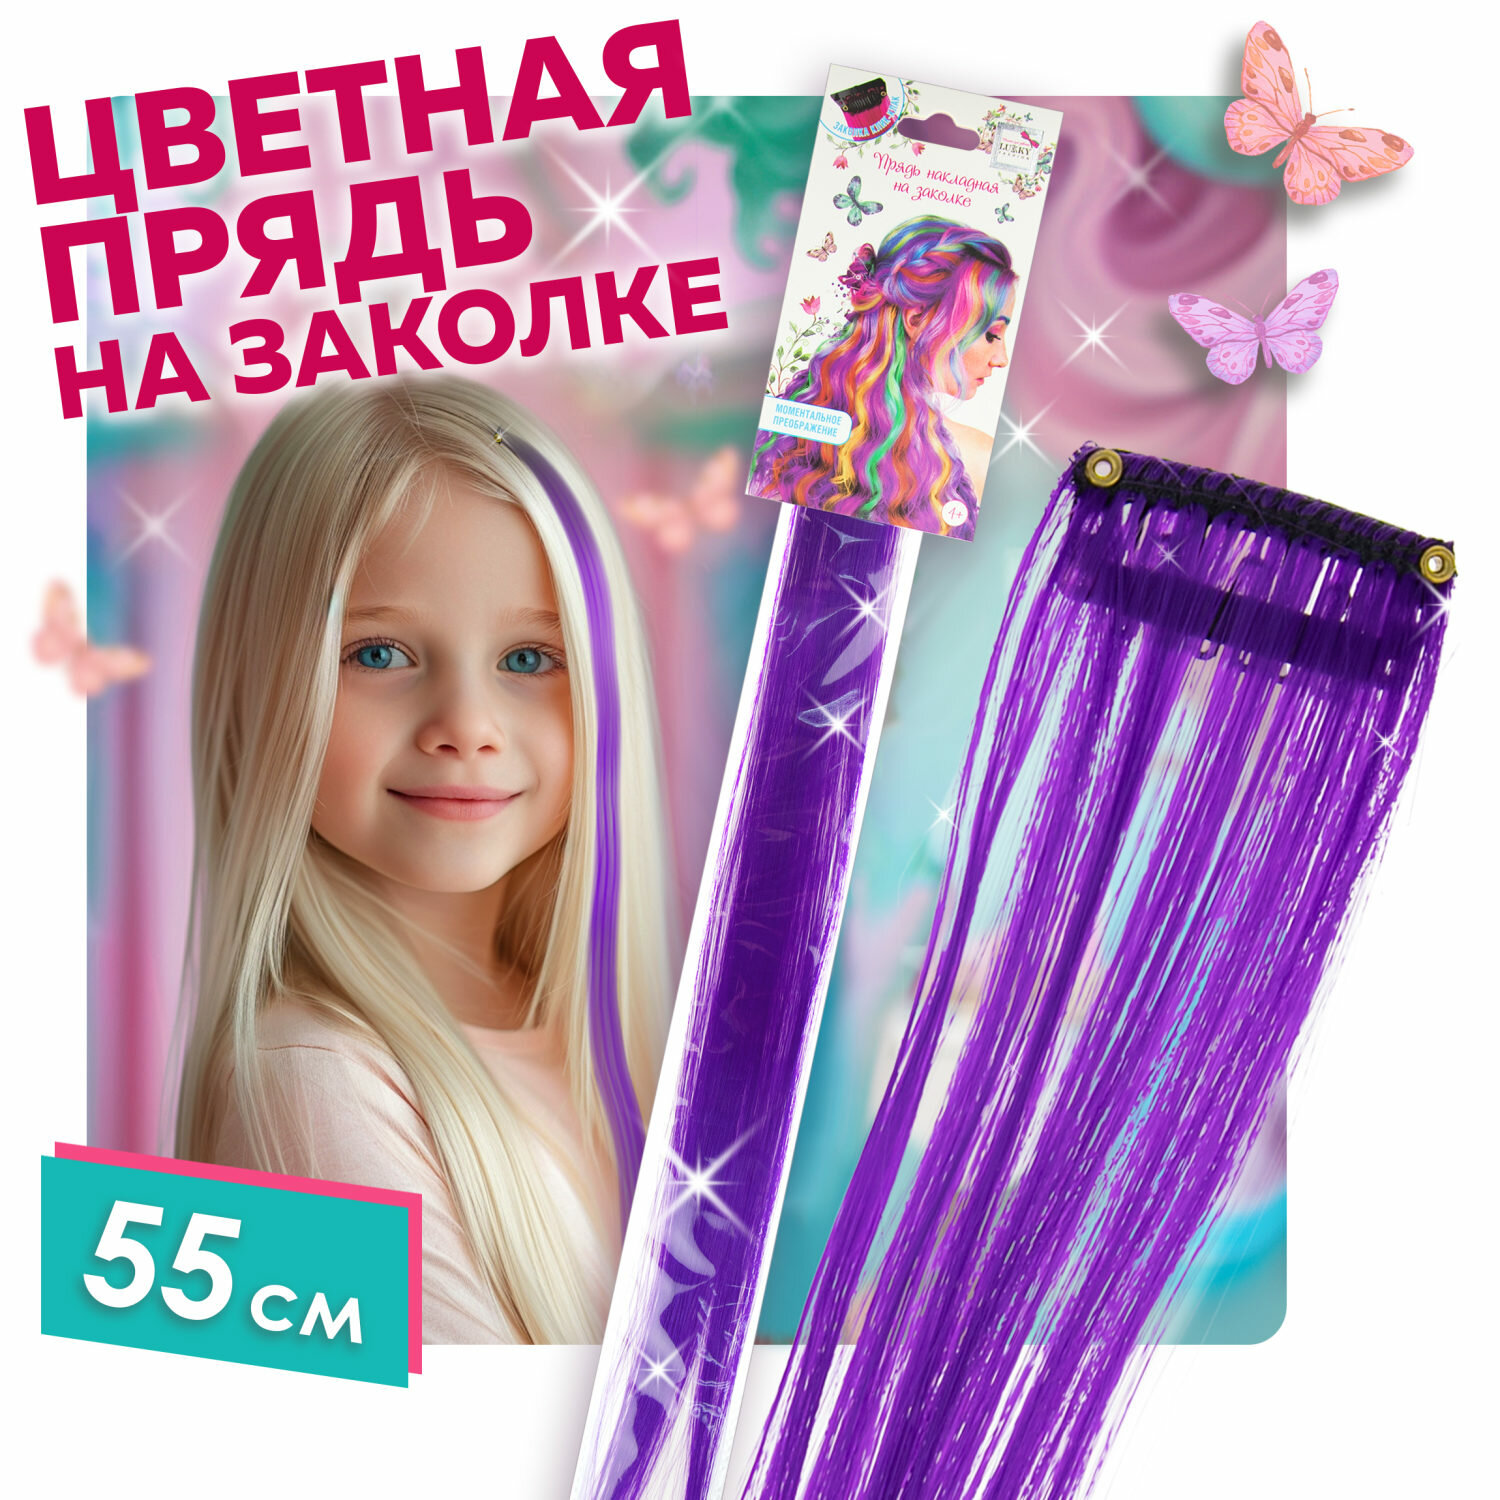 Lukky Fashion Прядь накладная на заколке, одноцветная, 55 см, фиолетовая